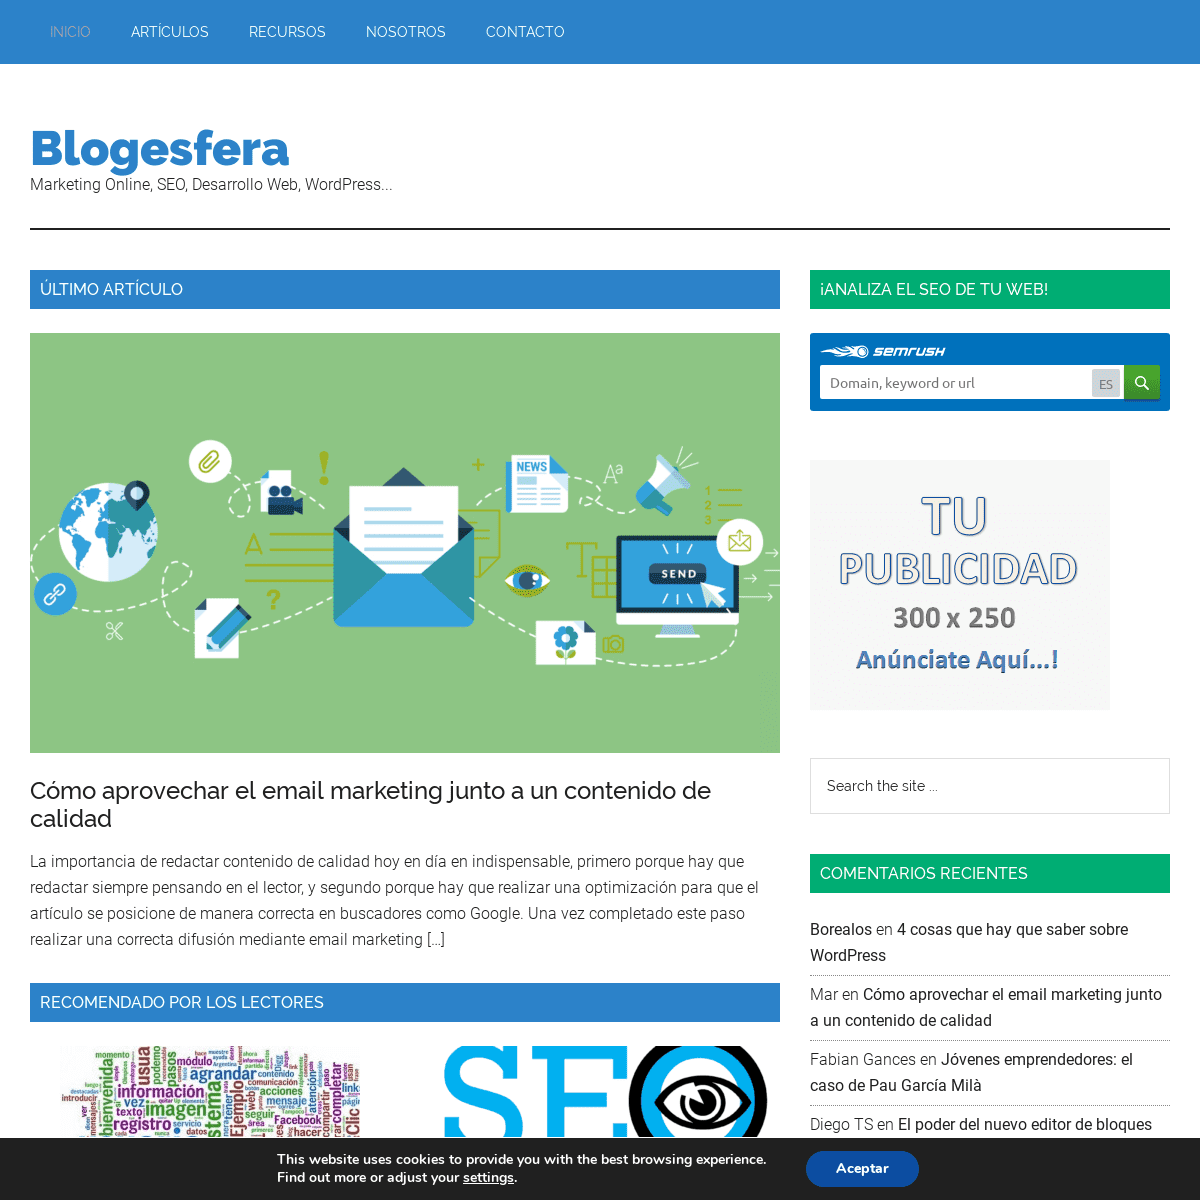 A complete backup of blogesfera.com